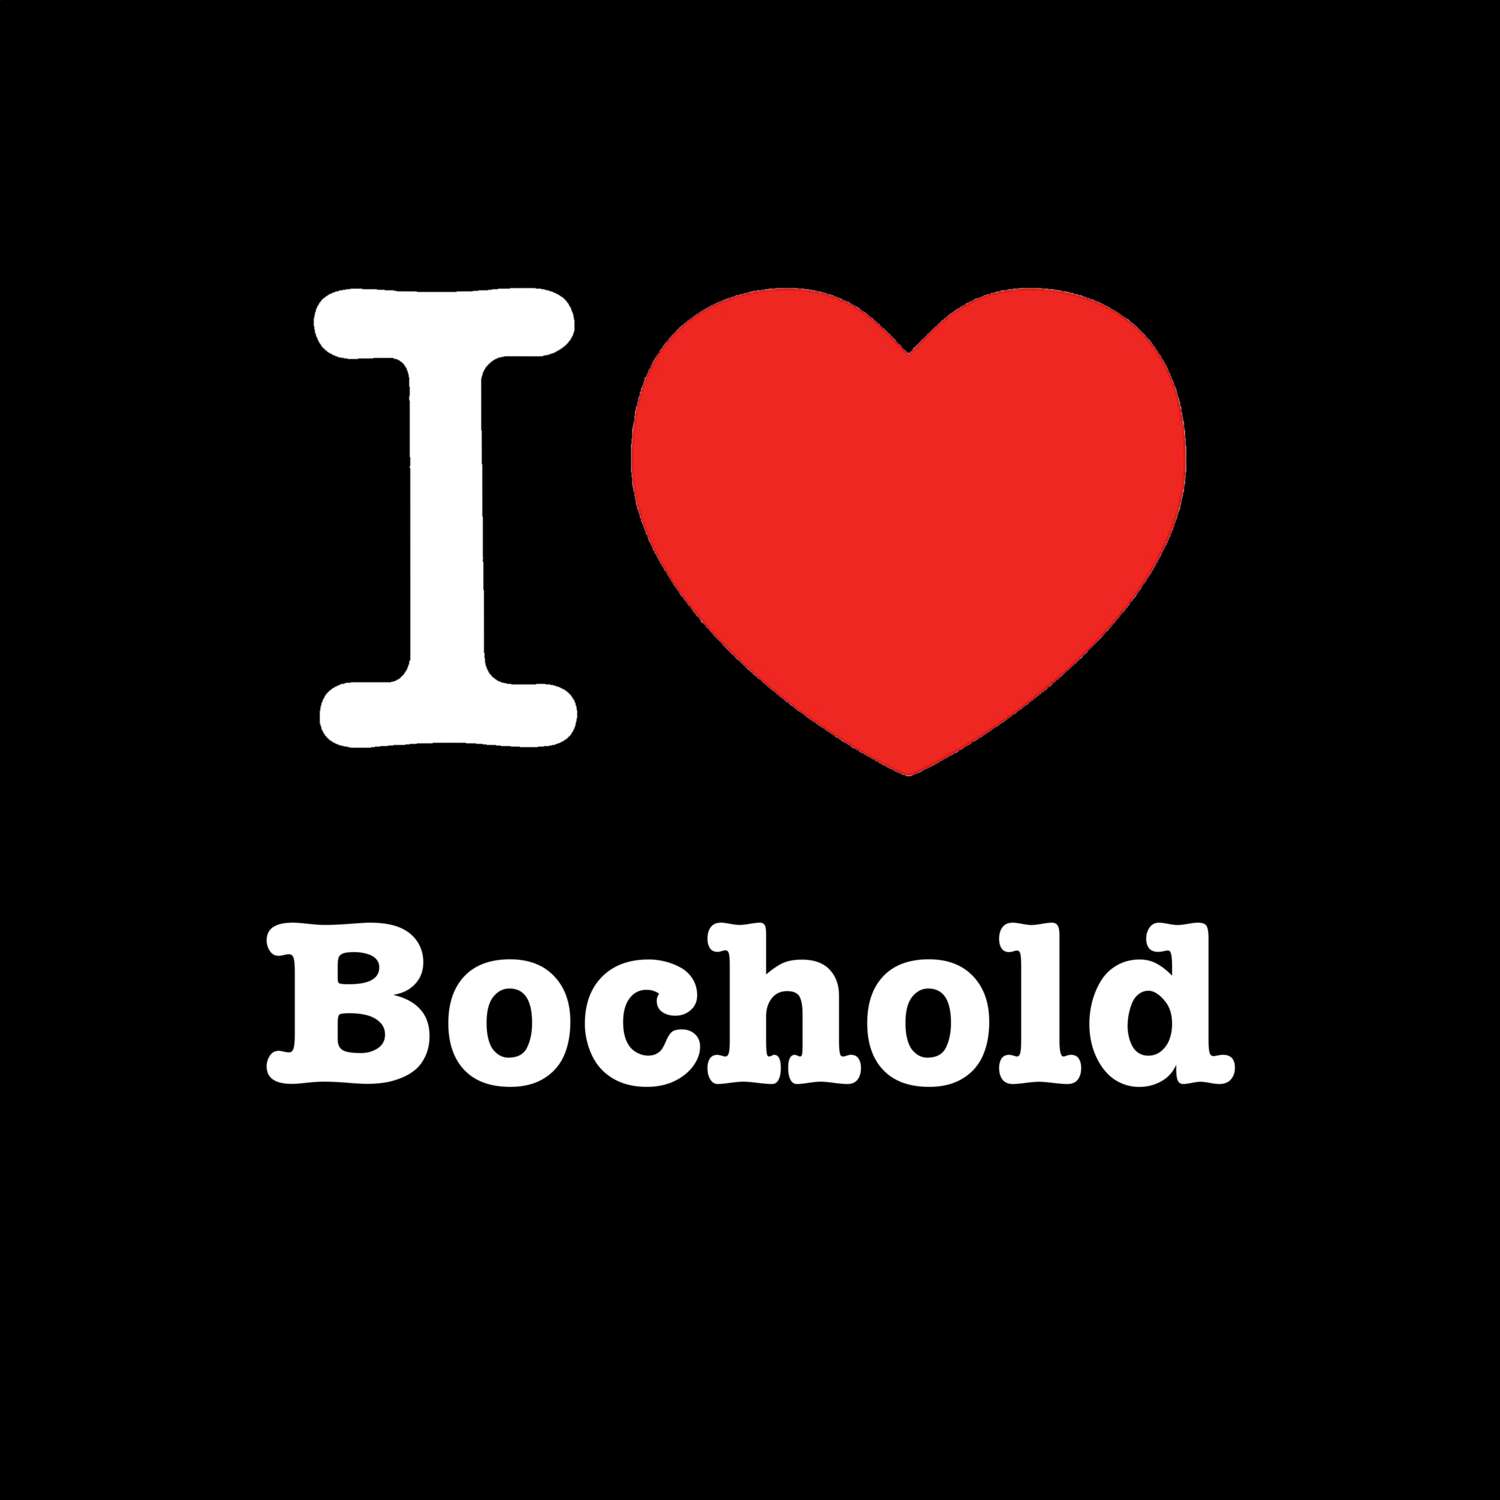 Bochold T-Shirt »I love«